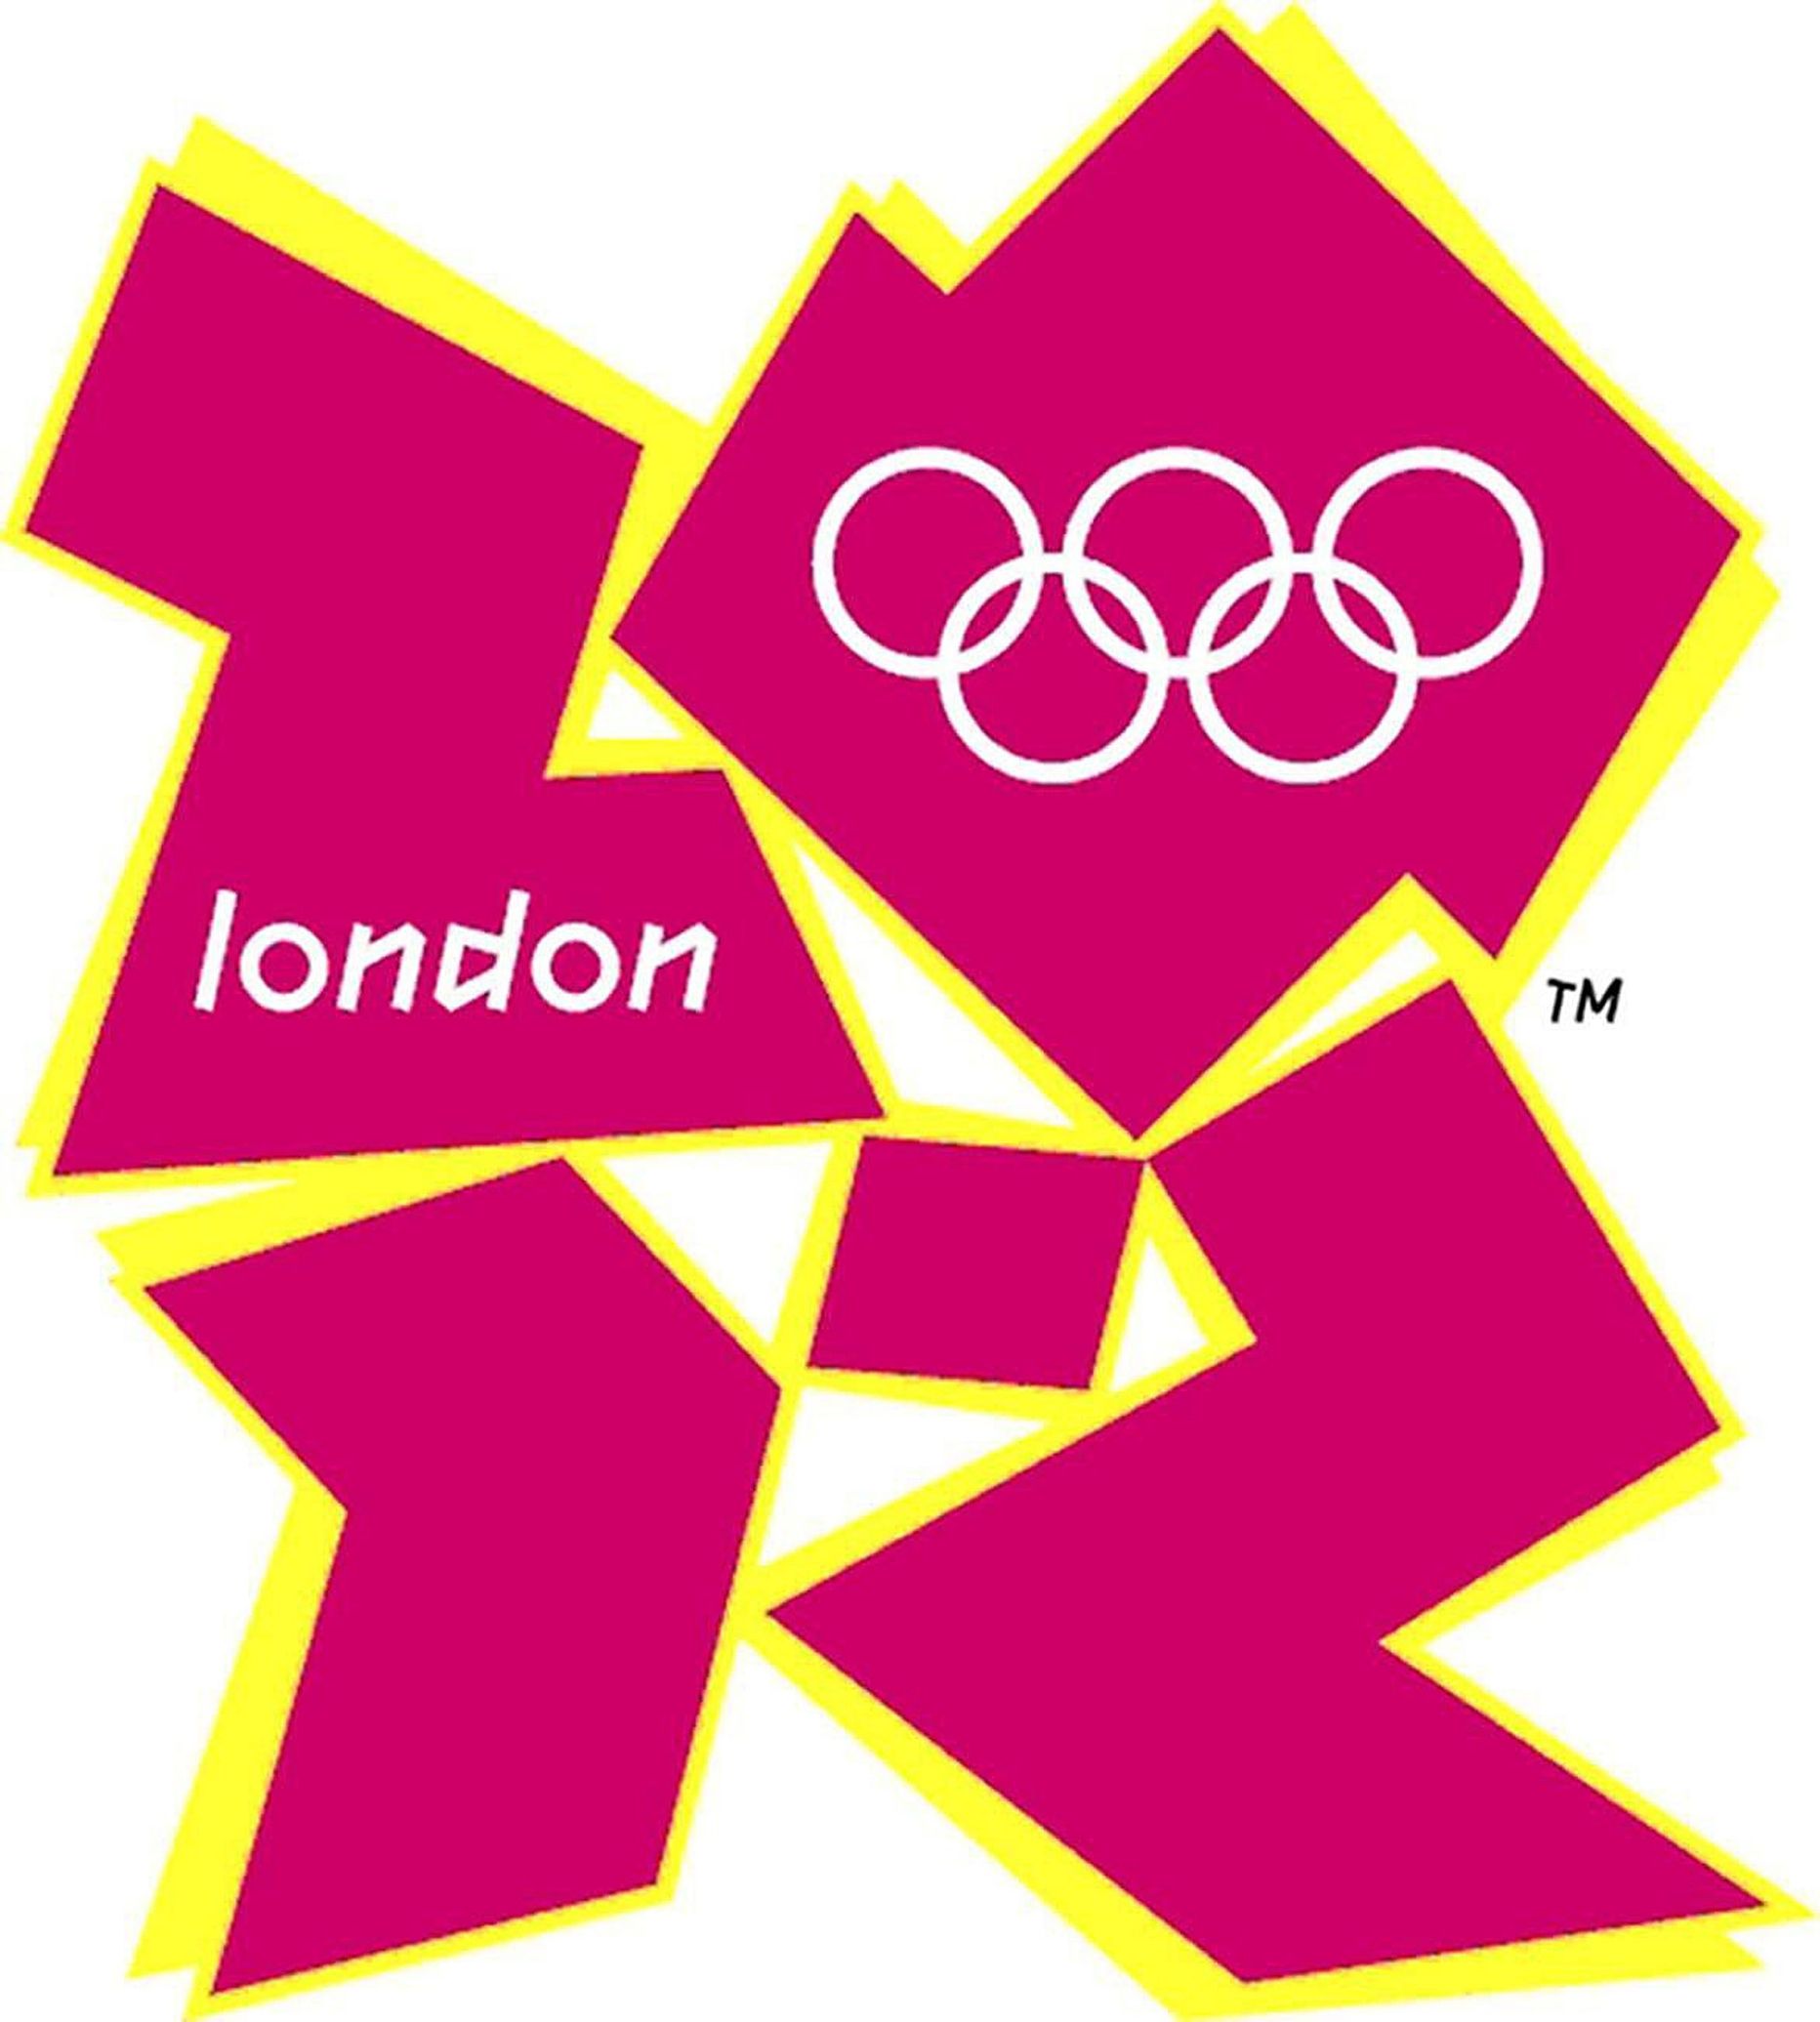 Londoni olümpia logo.